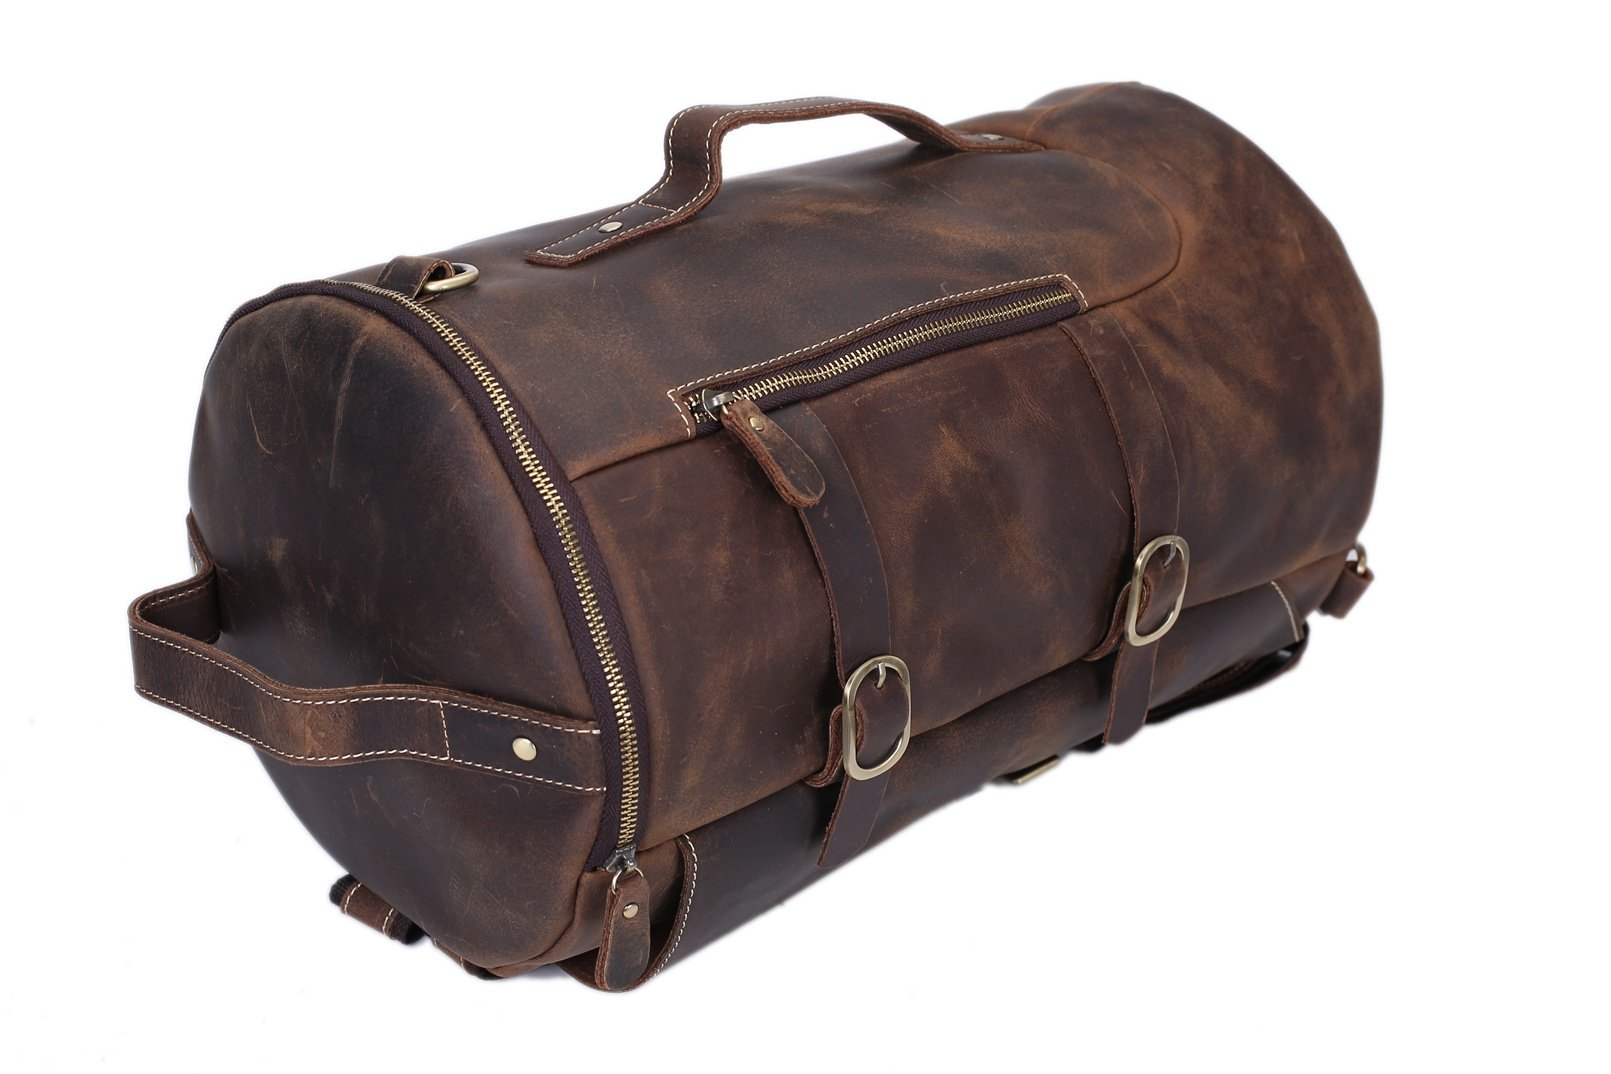 MoshiLeatherBag - Handmade Leather Bag Manufacturer — Handmade Vintage Leather Backpack, Travel ...